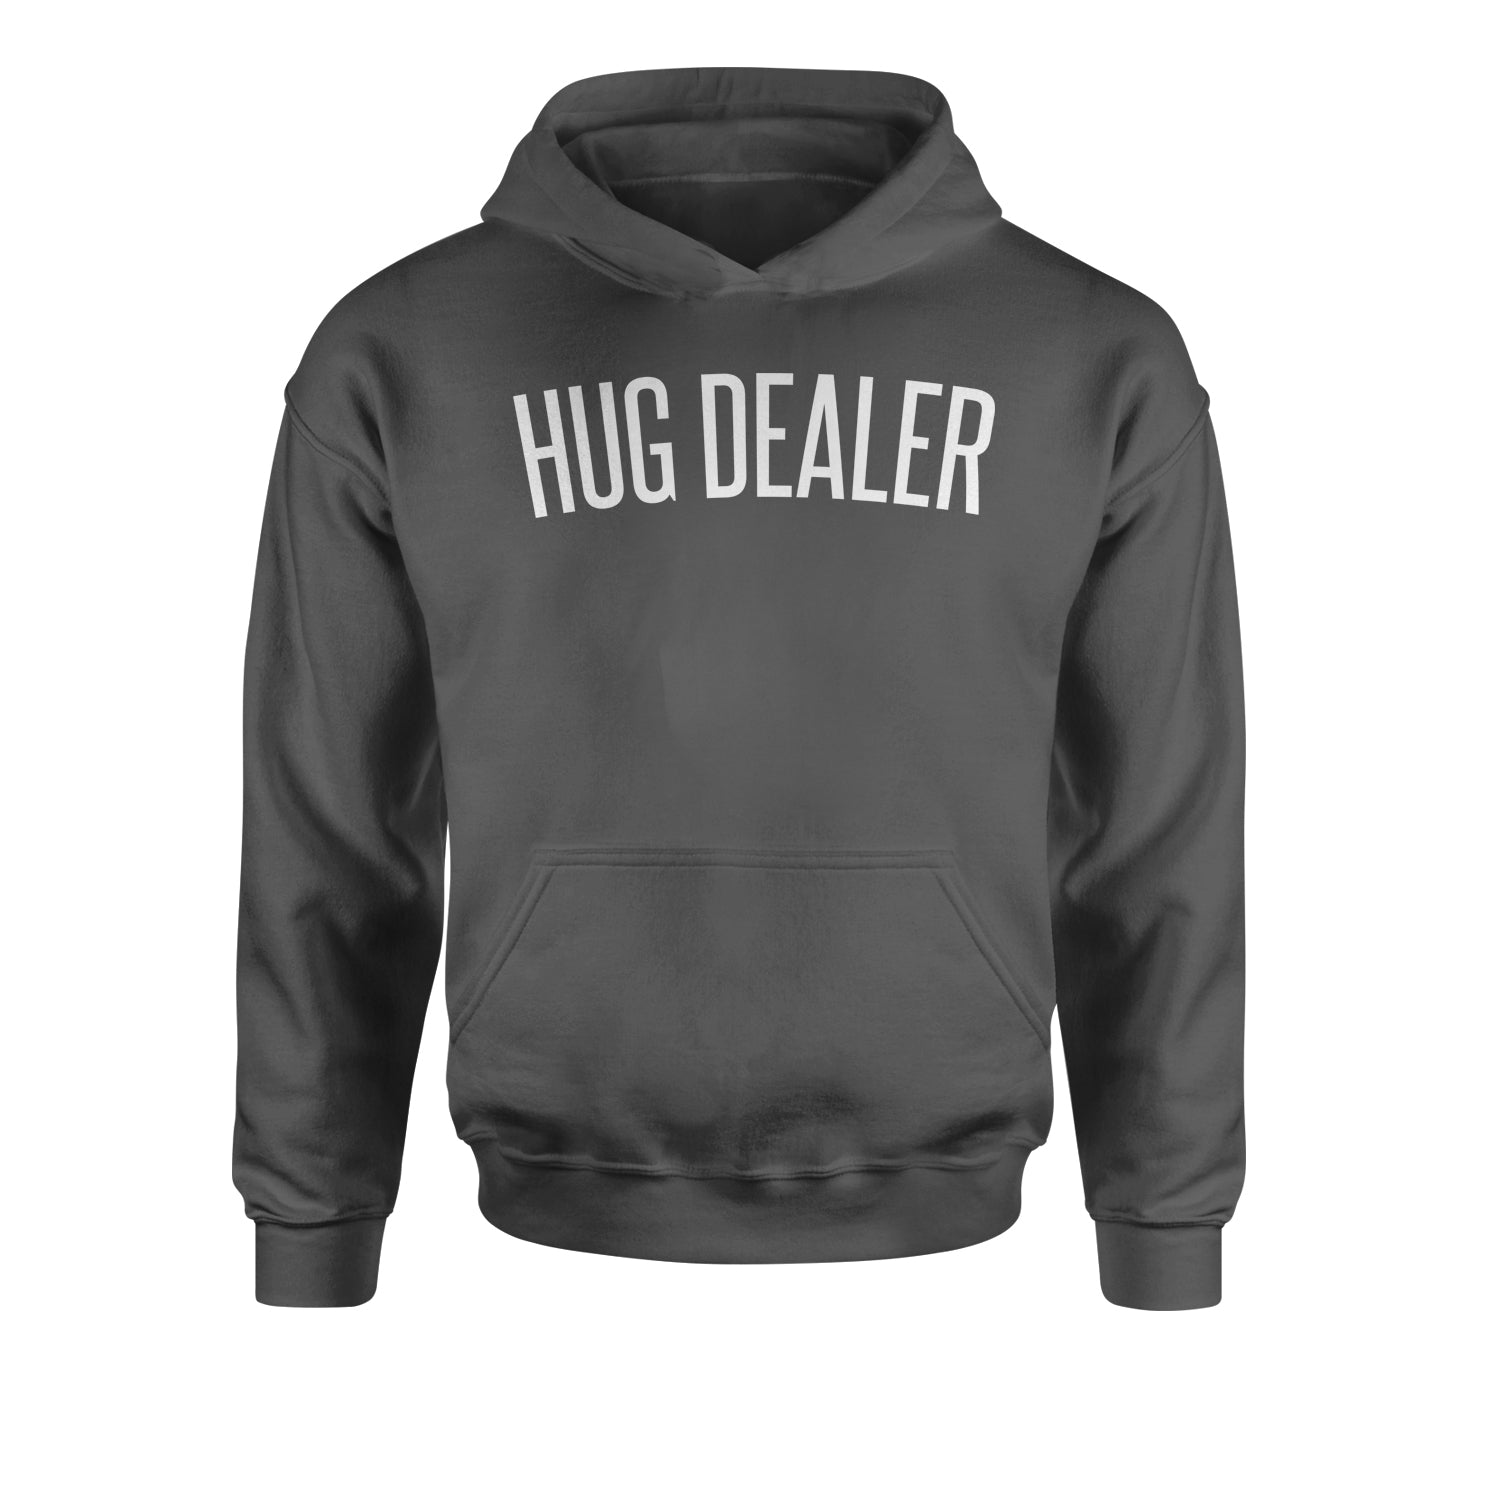 Hug Dealer Youth-Sized Hoodie dealing, free, hug, hugger, hugs by Expression Tees